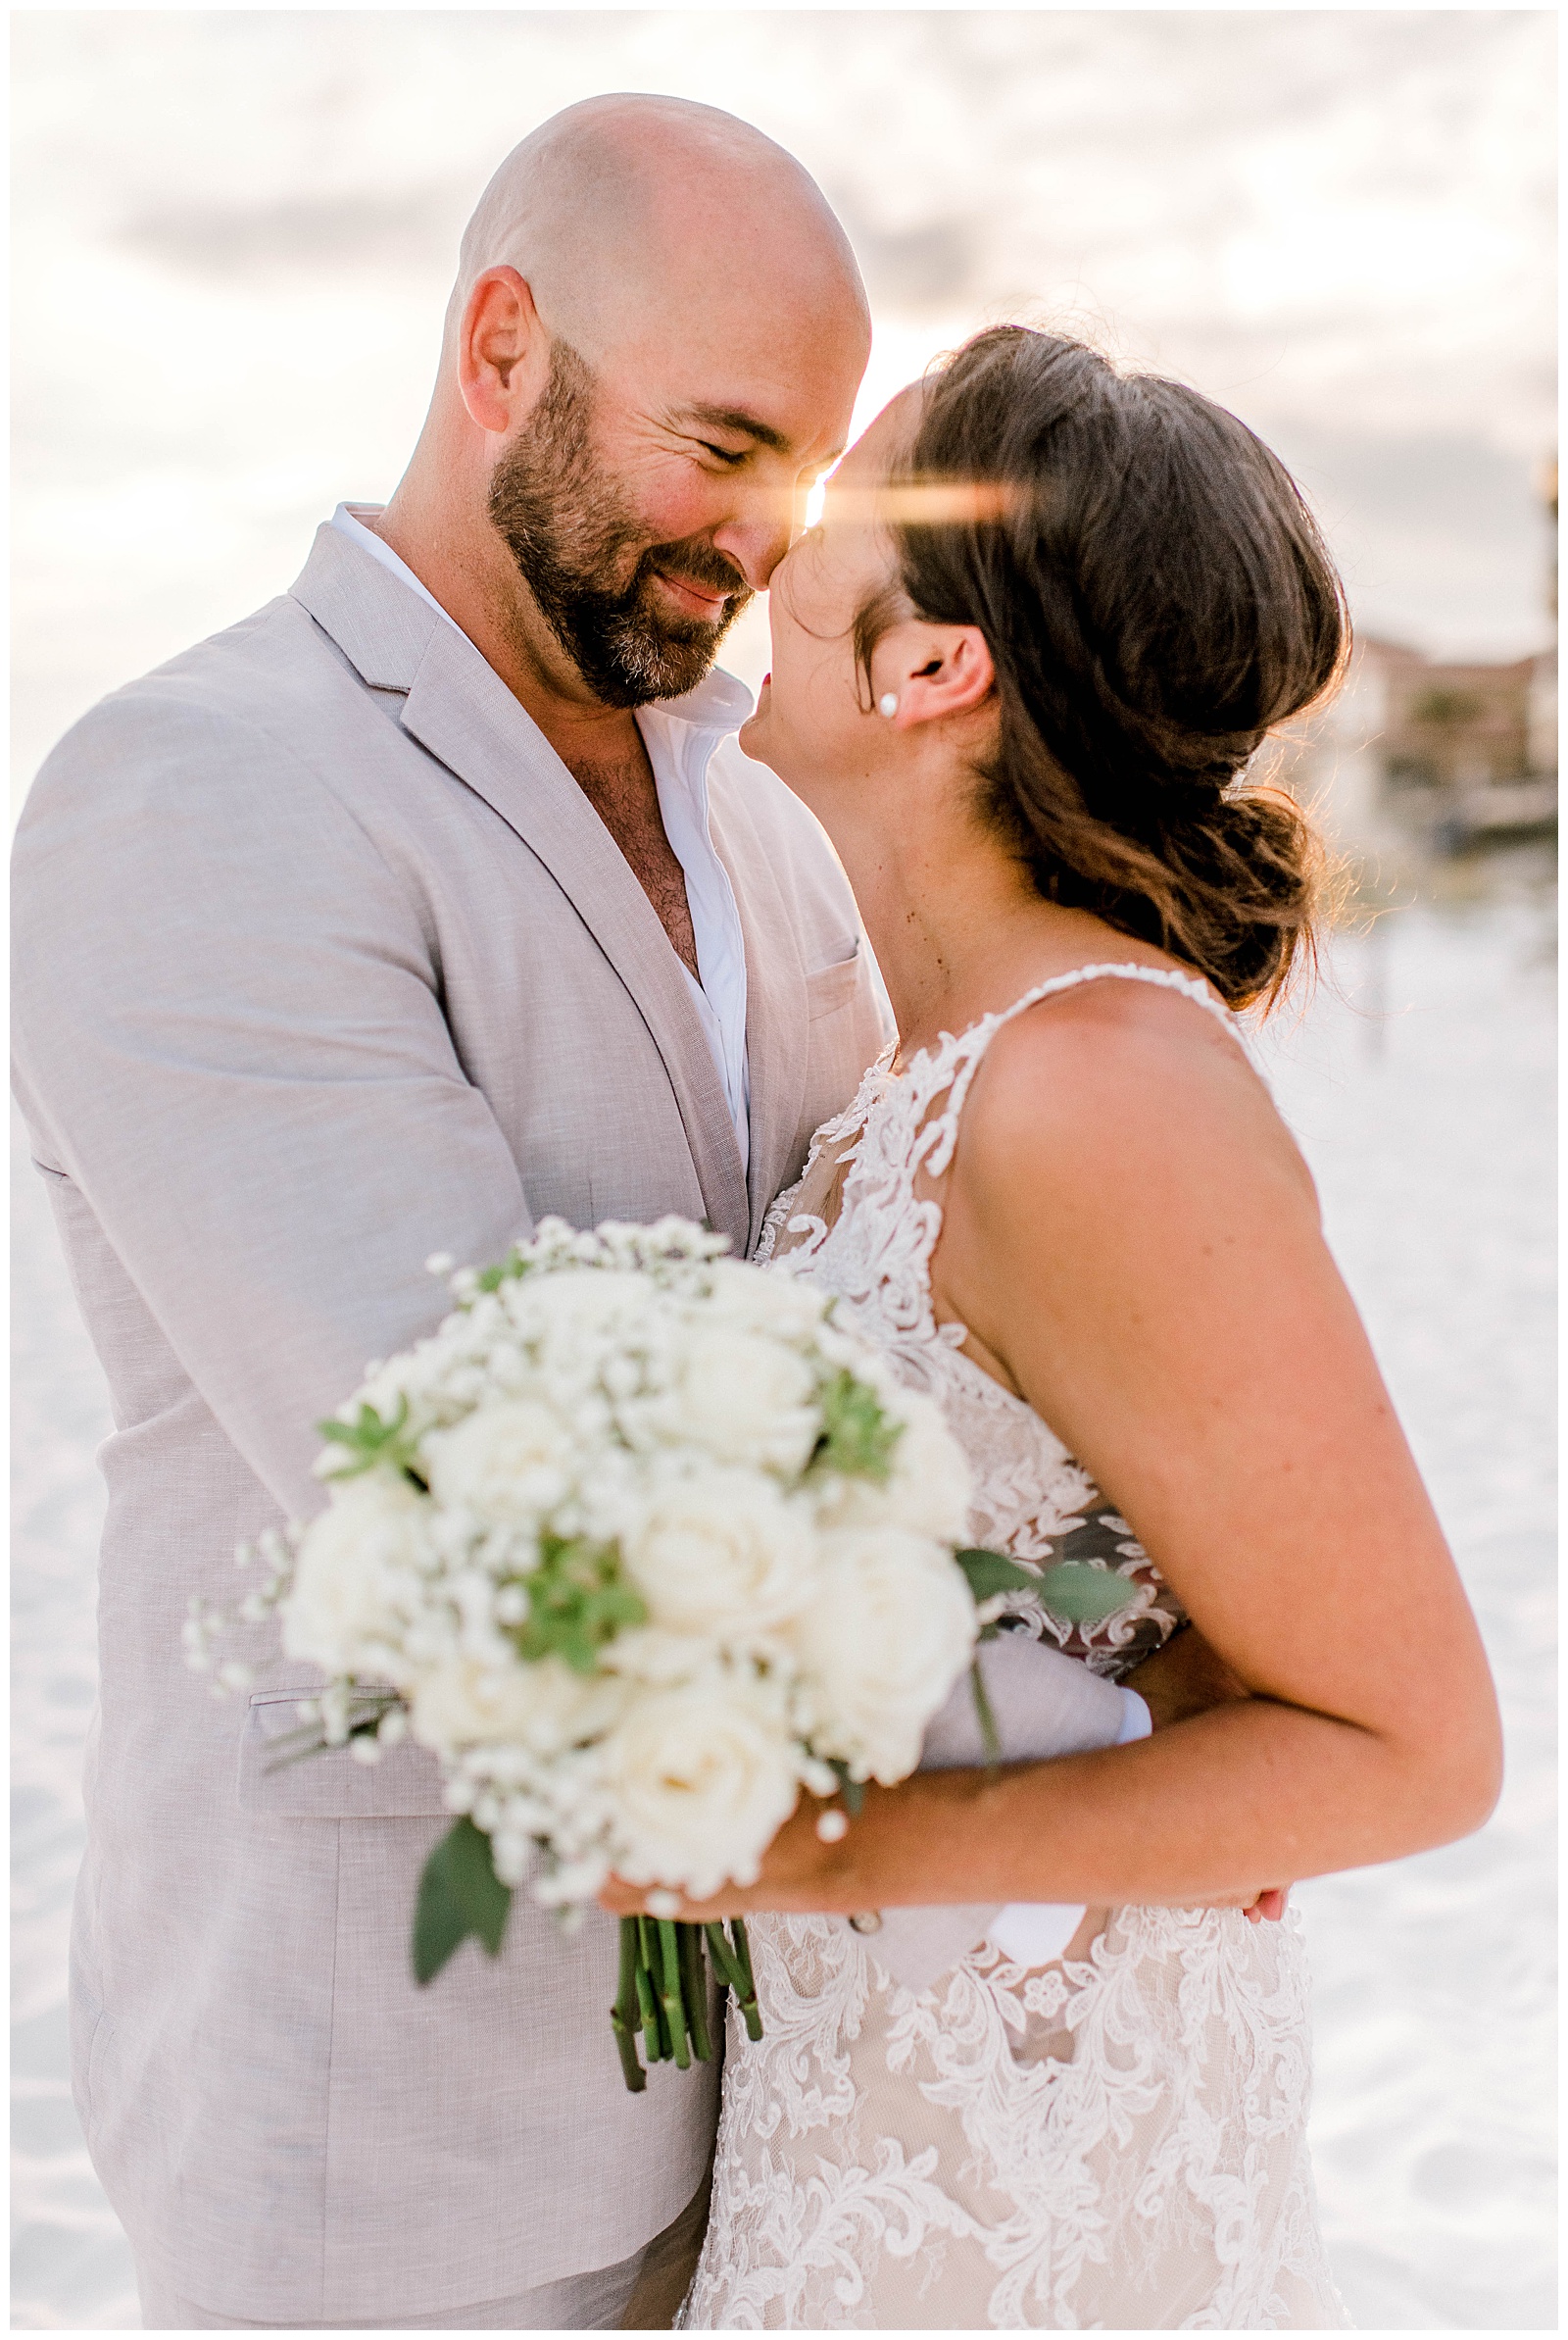 Destin Florida Wedding at the Crystal Beach Inn | Destin Wedding Photographer